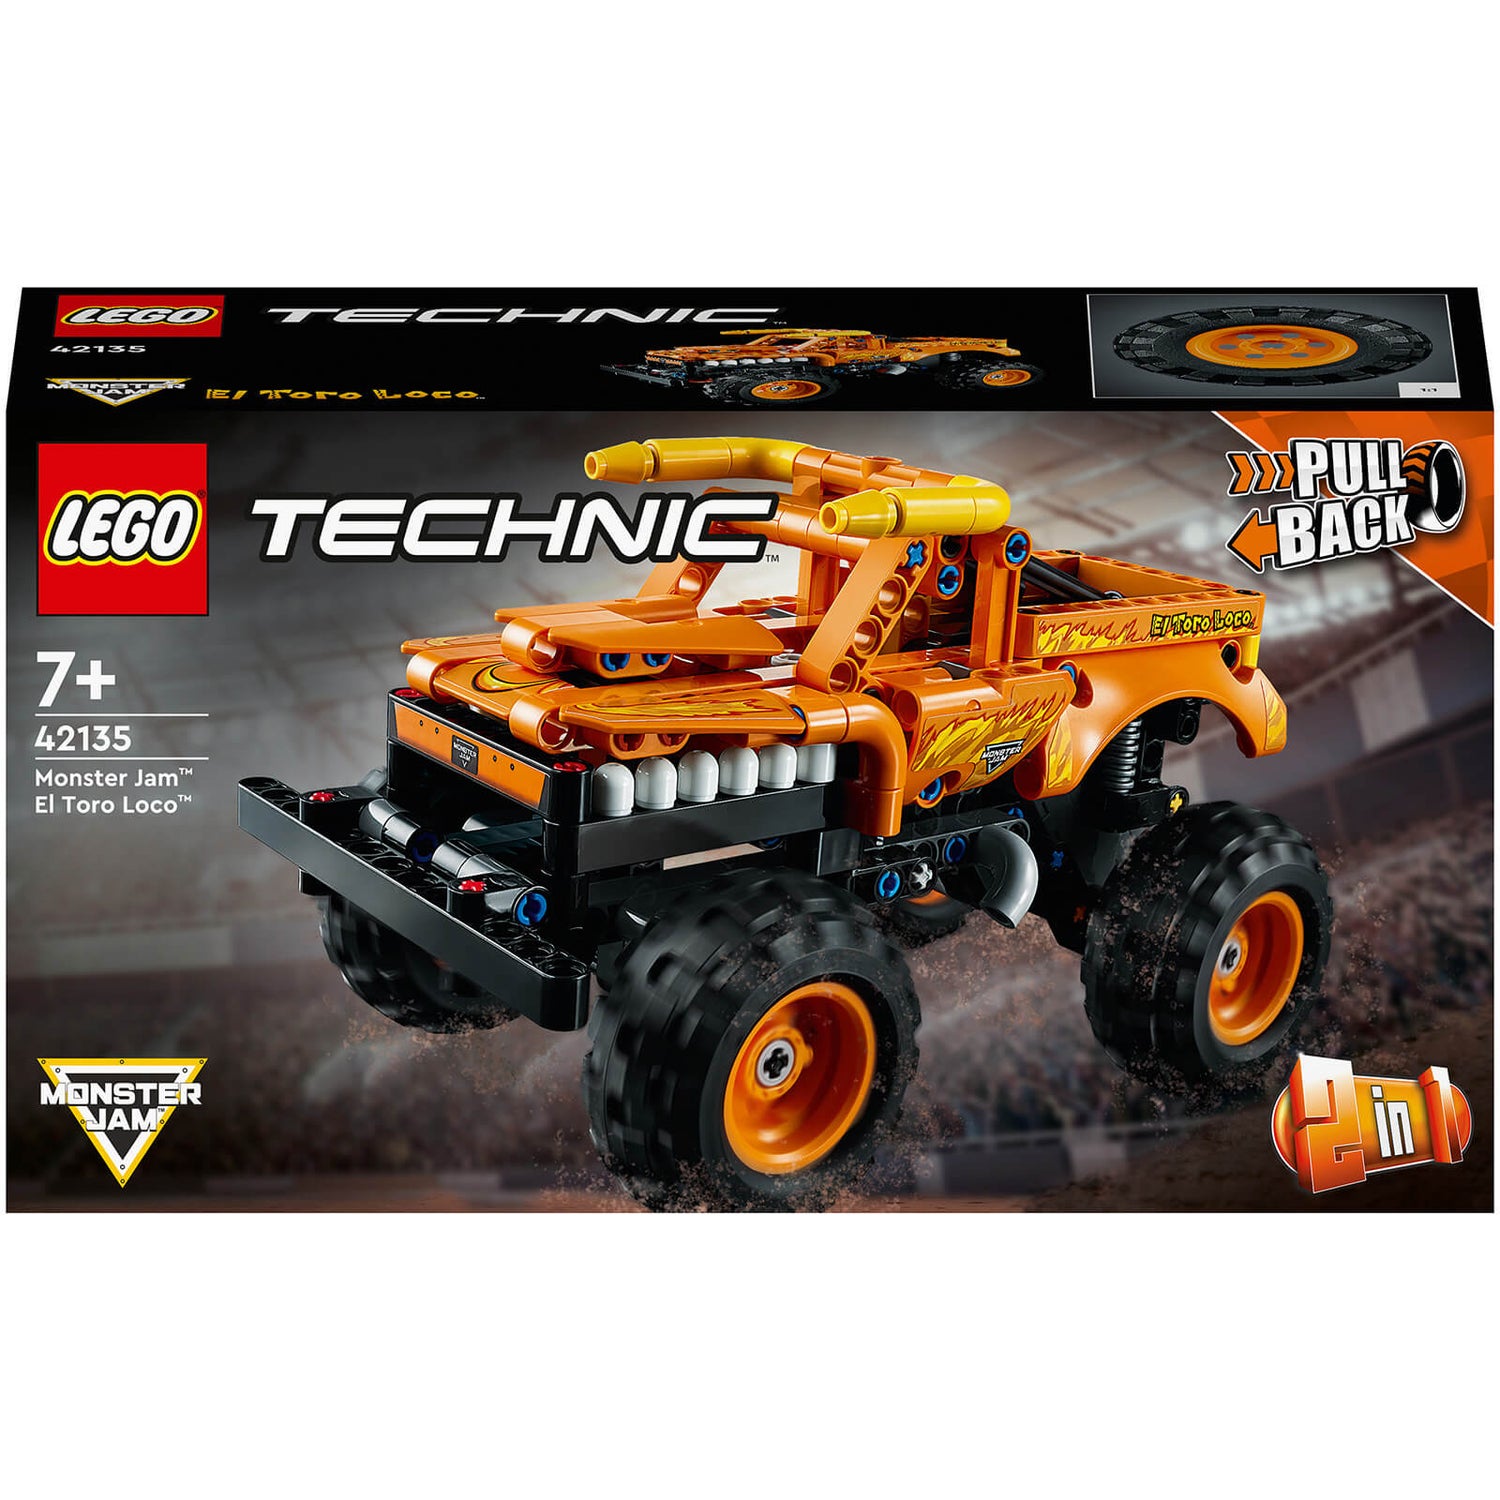 LEGO Technic: Monster Jam El Toro Loco Truck Toy (42135)